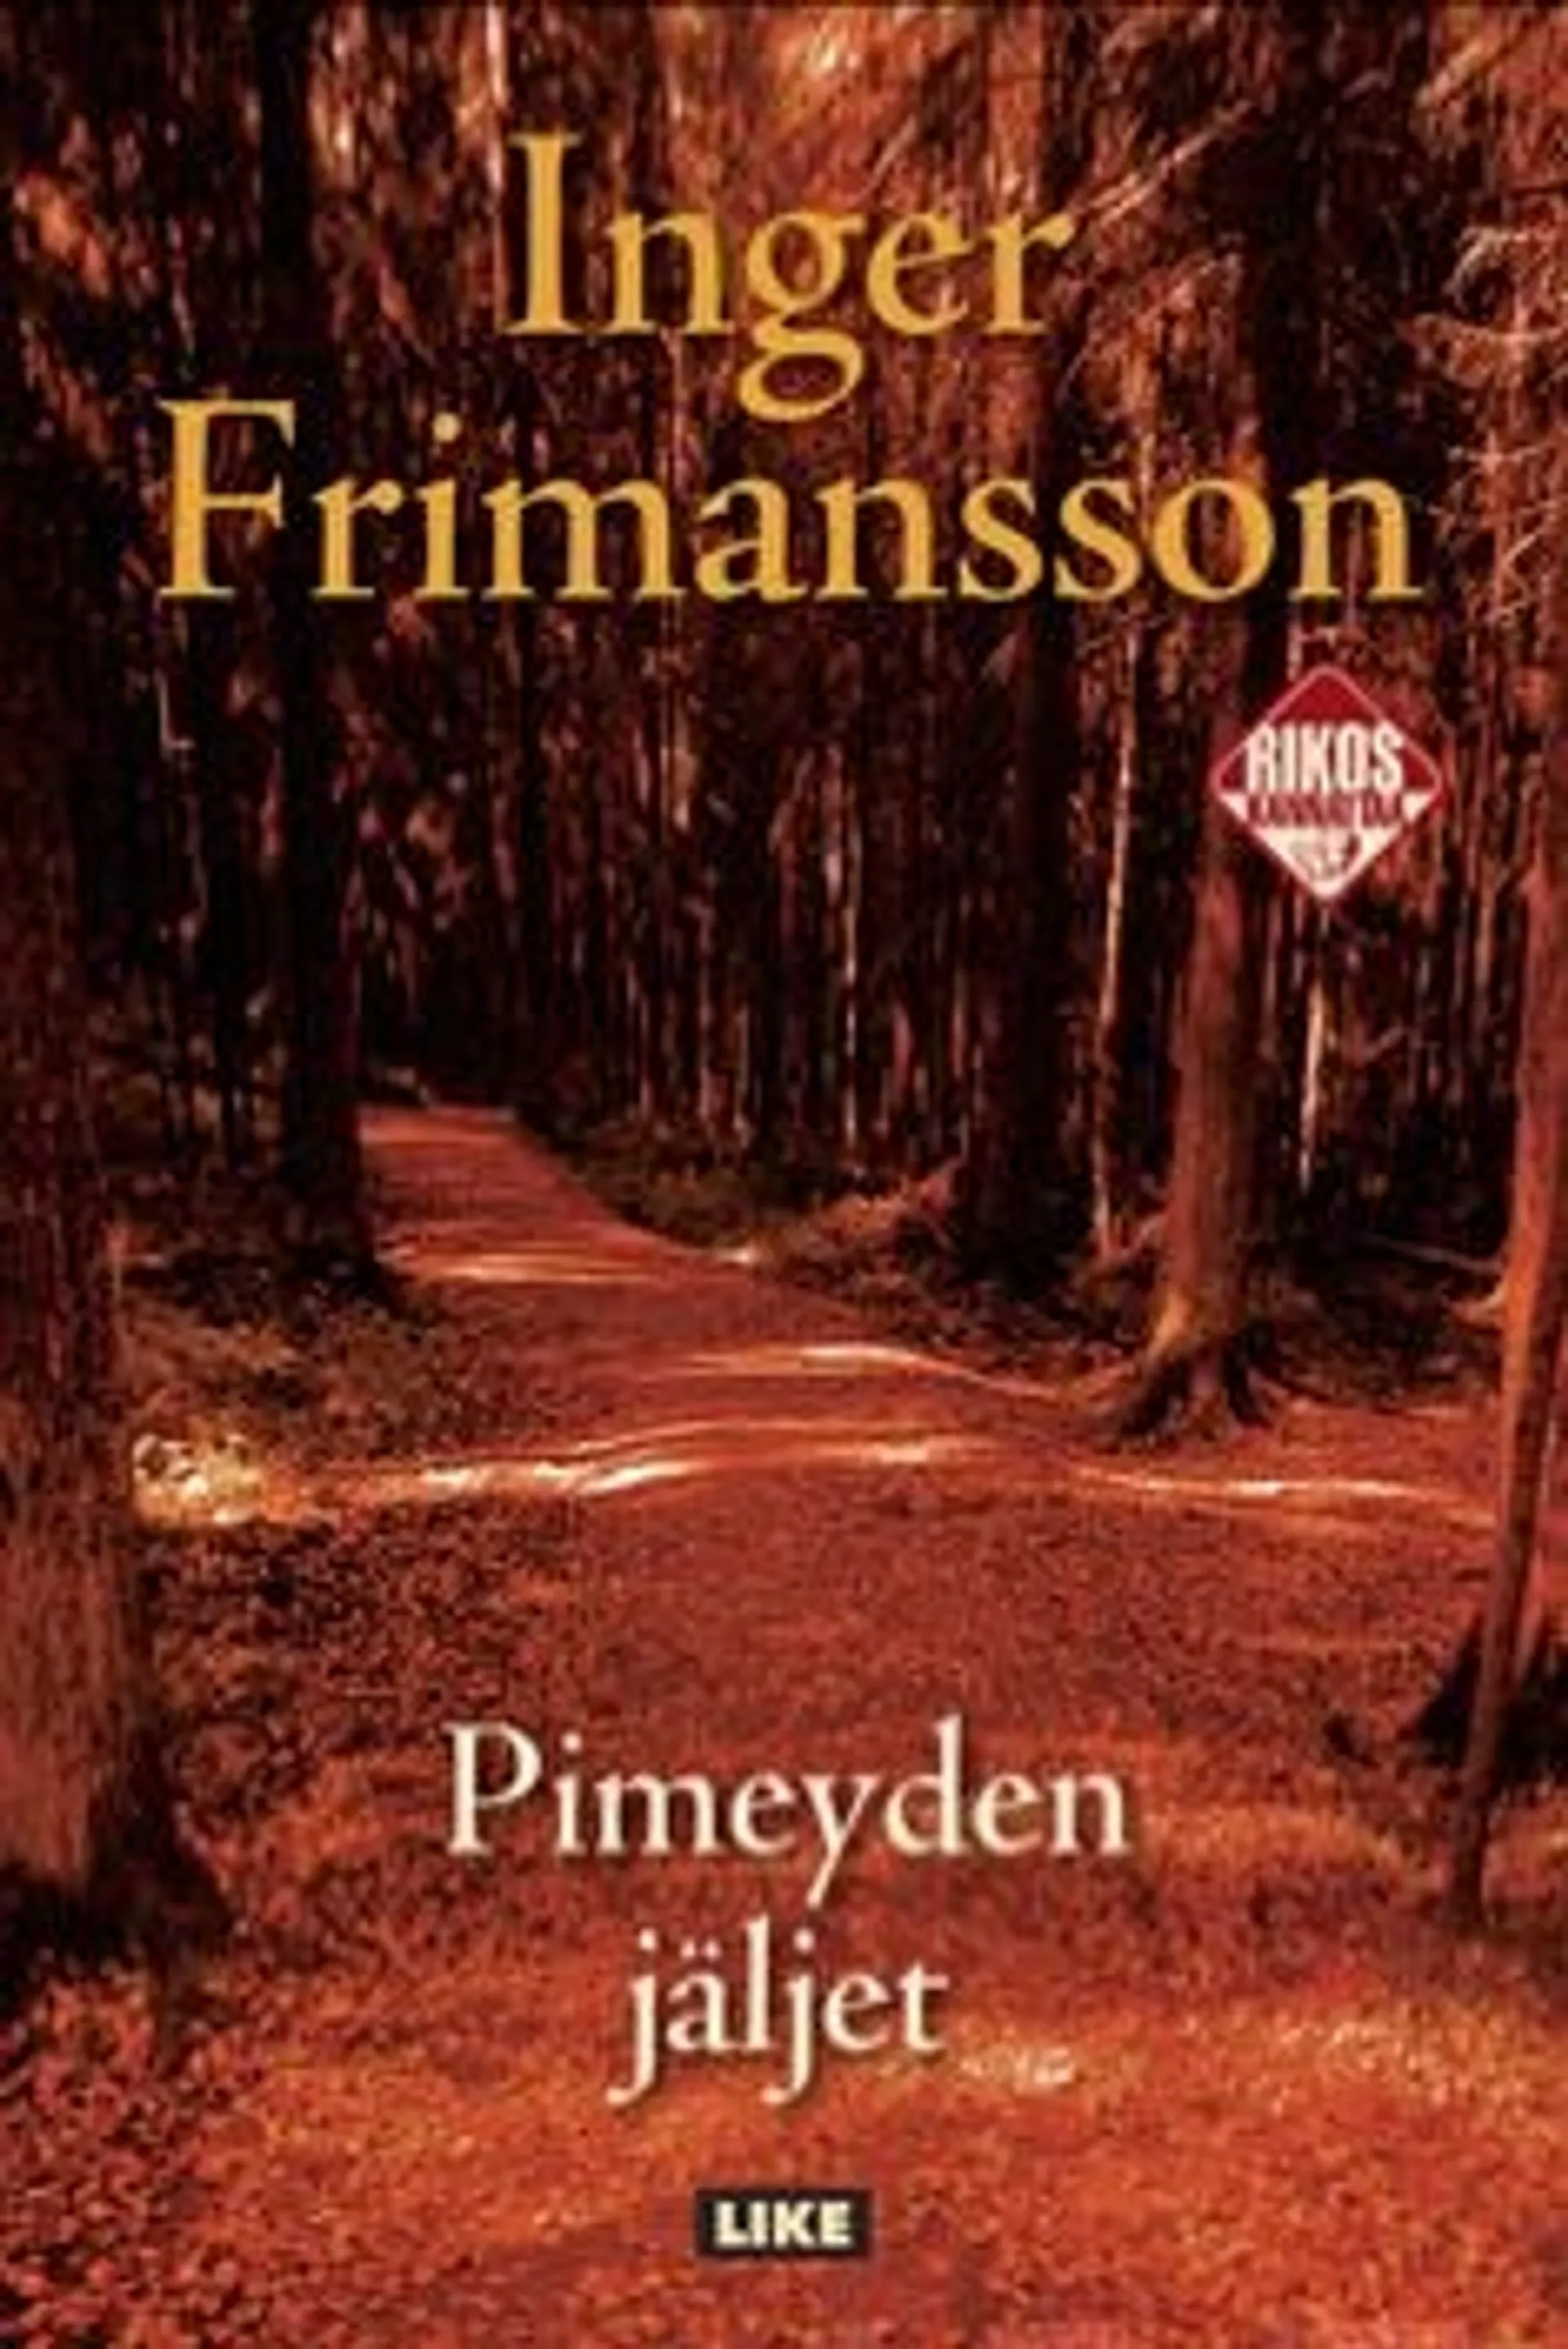 Frimansson, Pimeyden jäljet